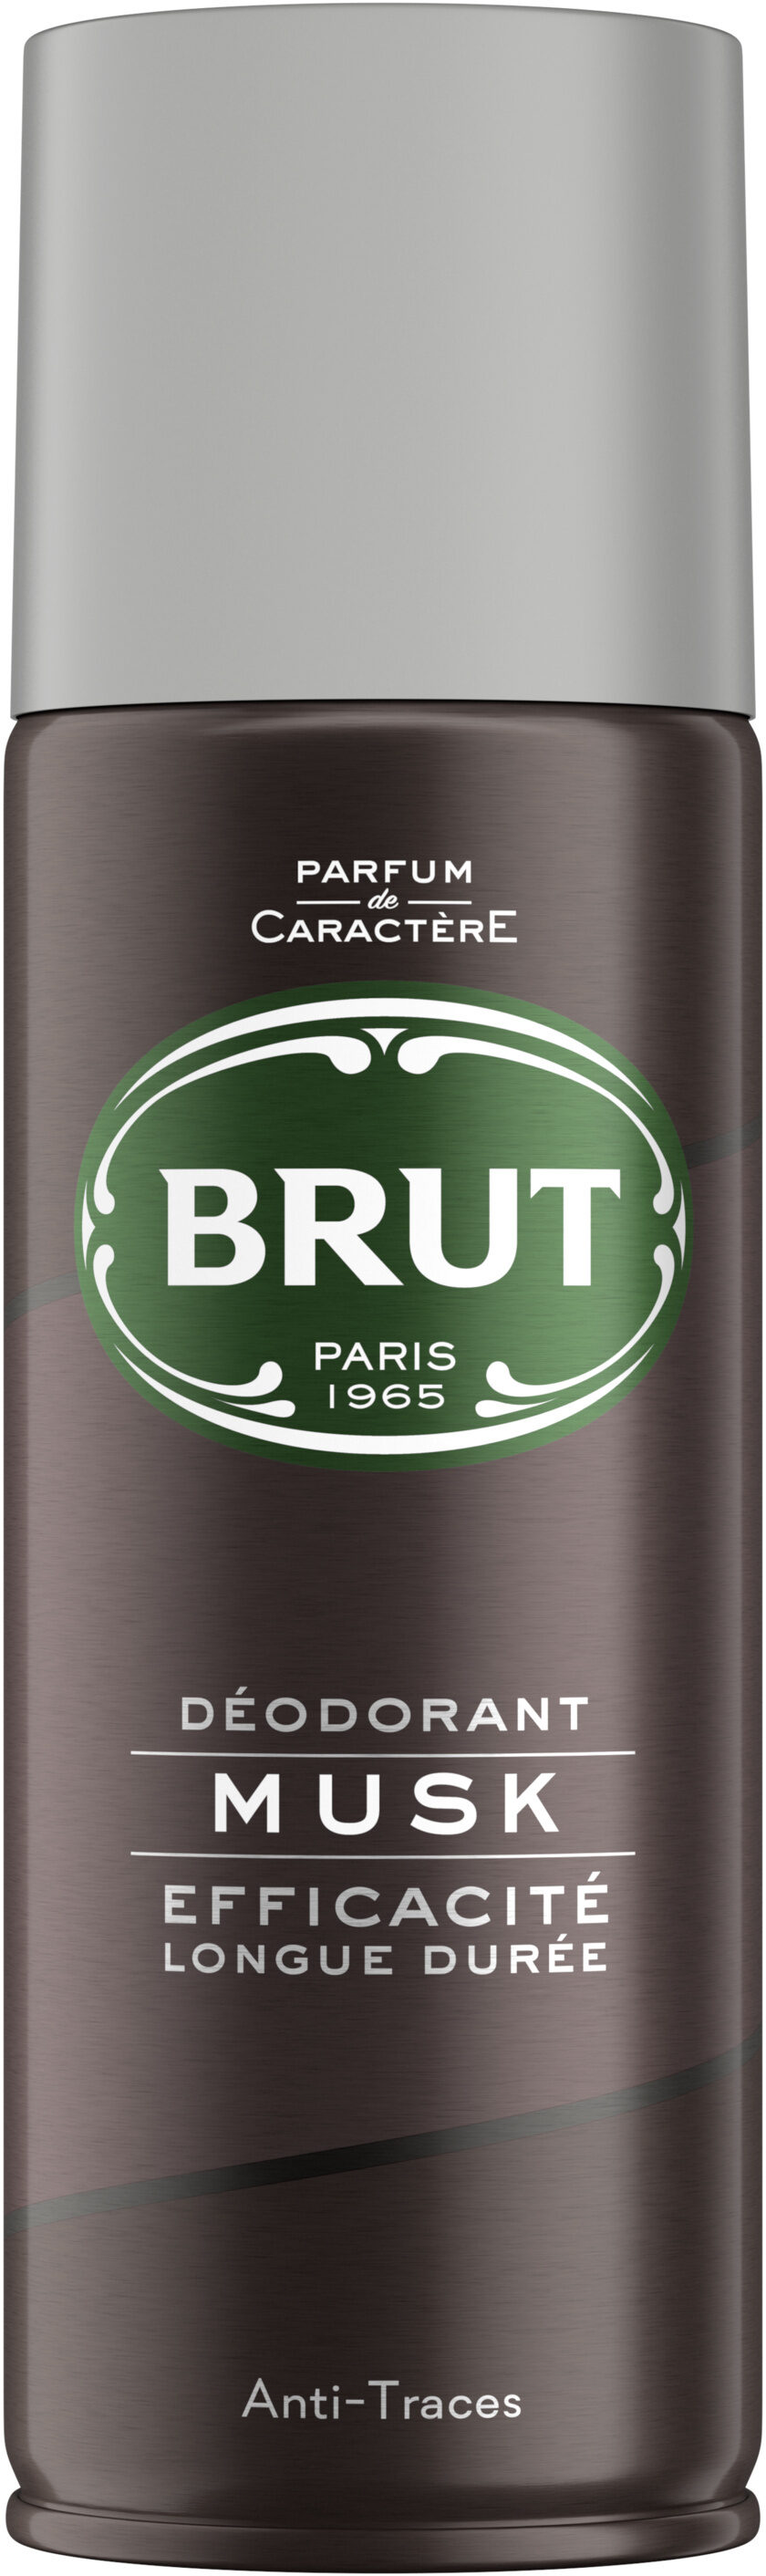 Brut Déodorant Homme Spray Musk 200ml - Product - fr